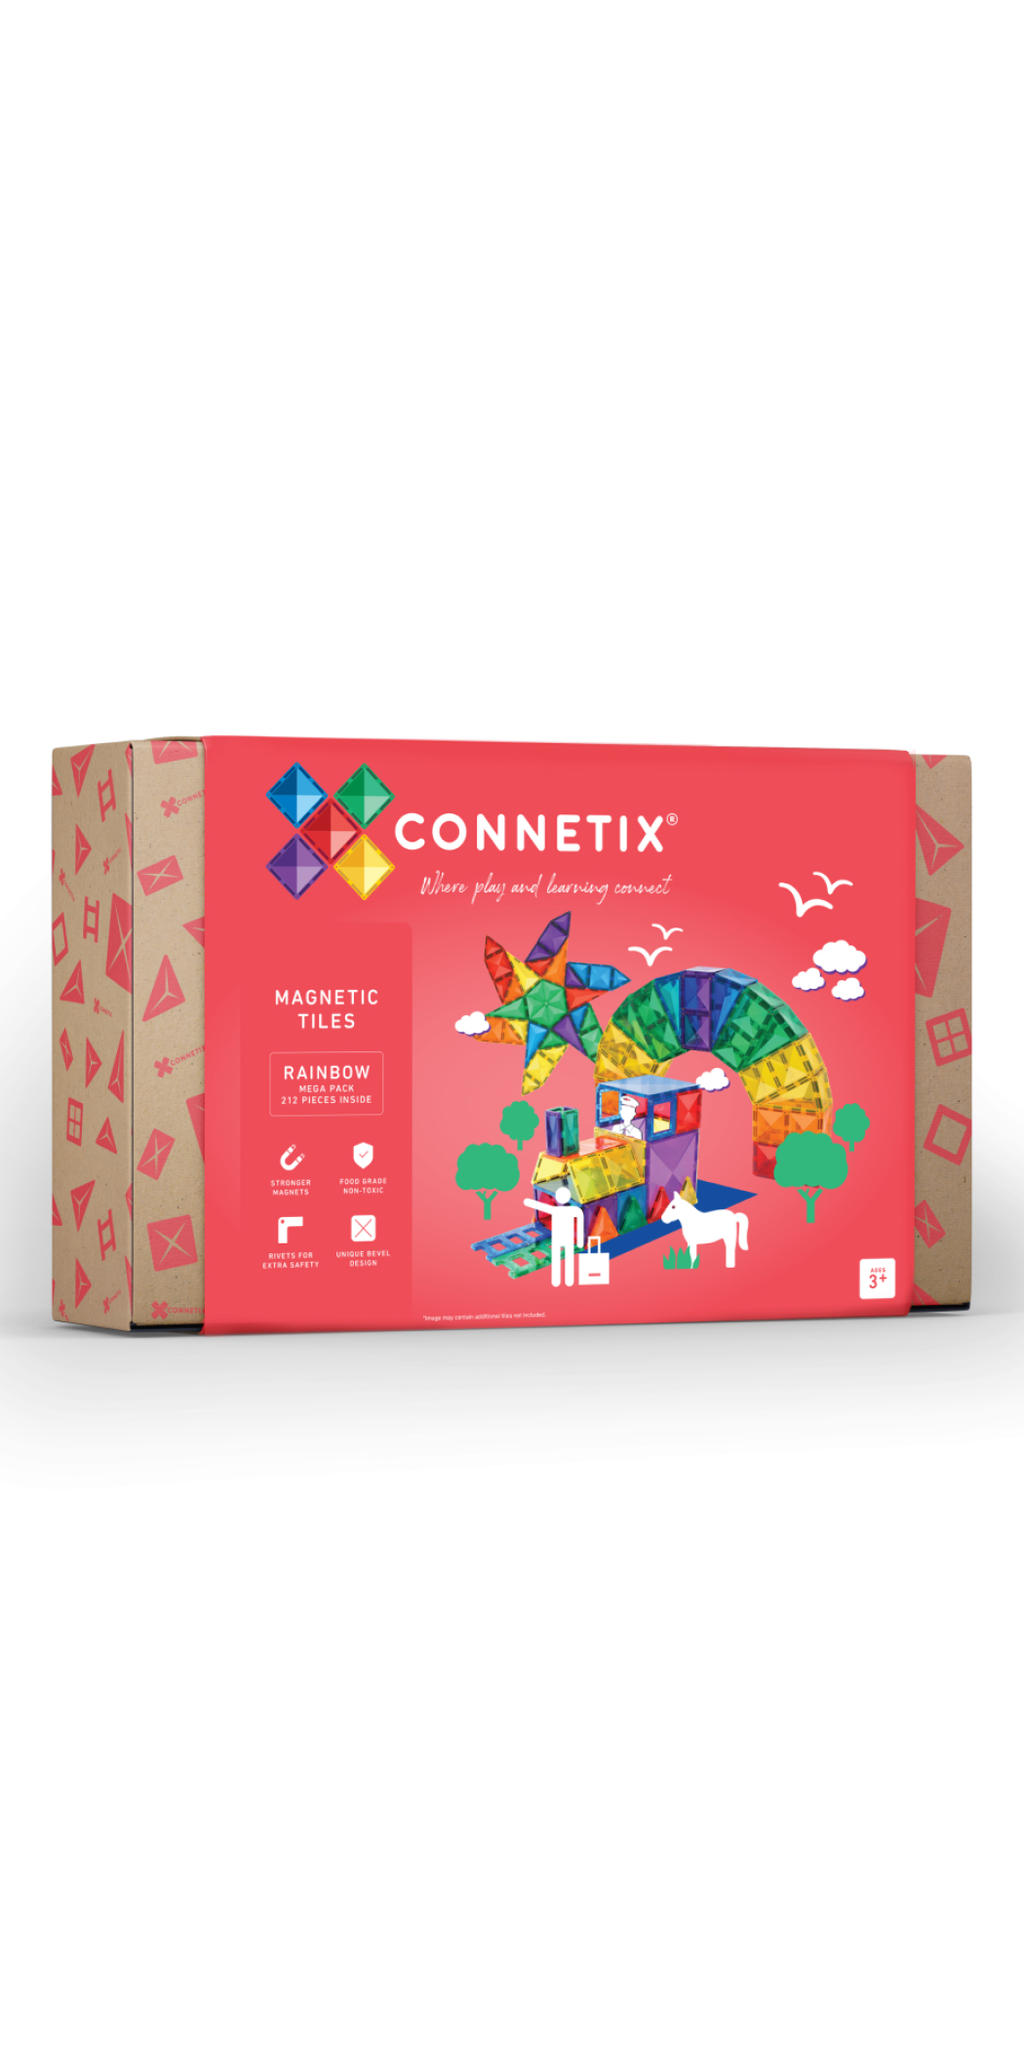 Connetix- new-7